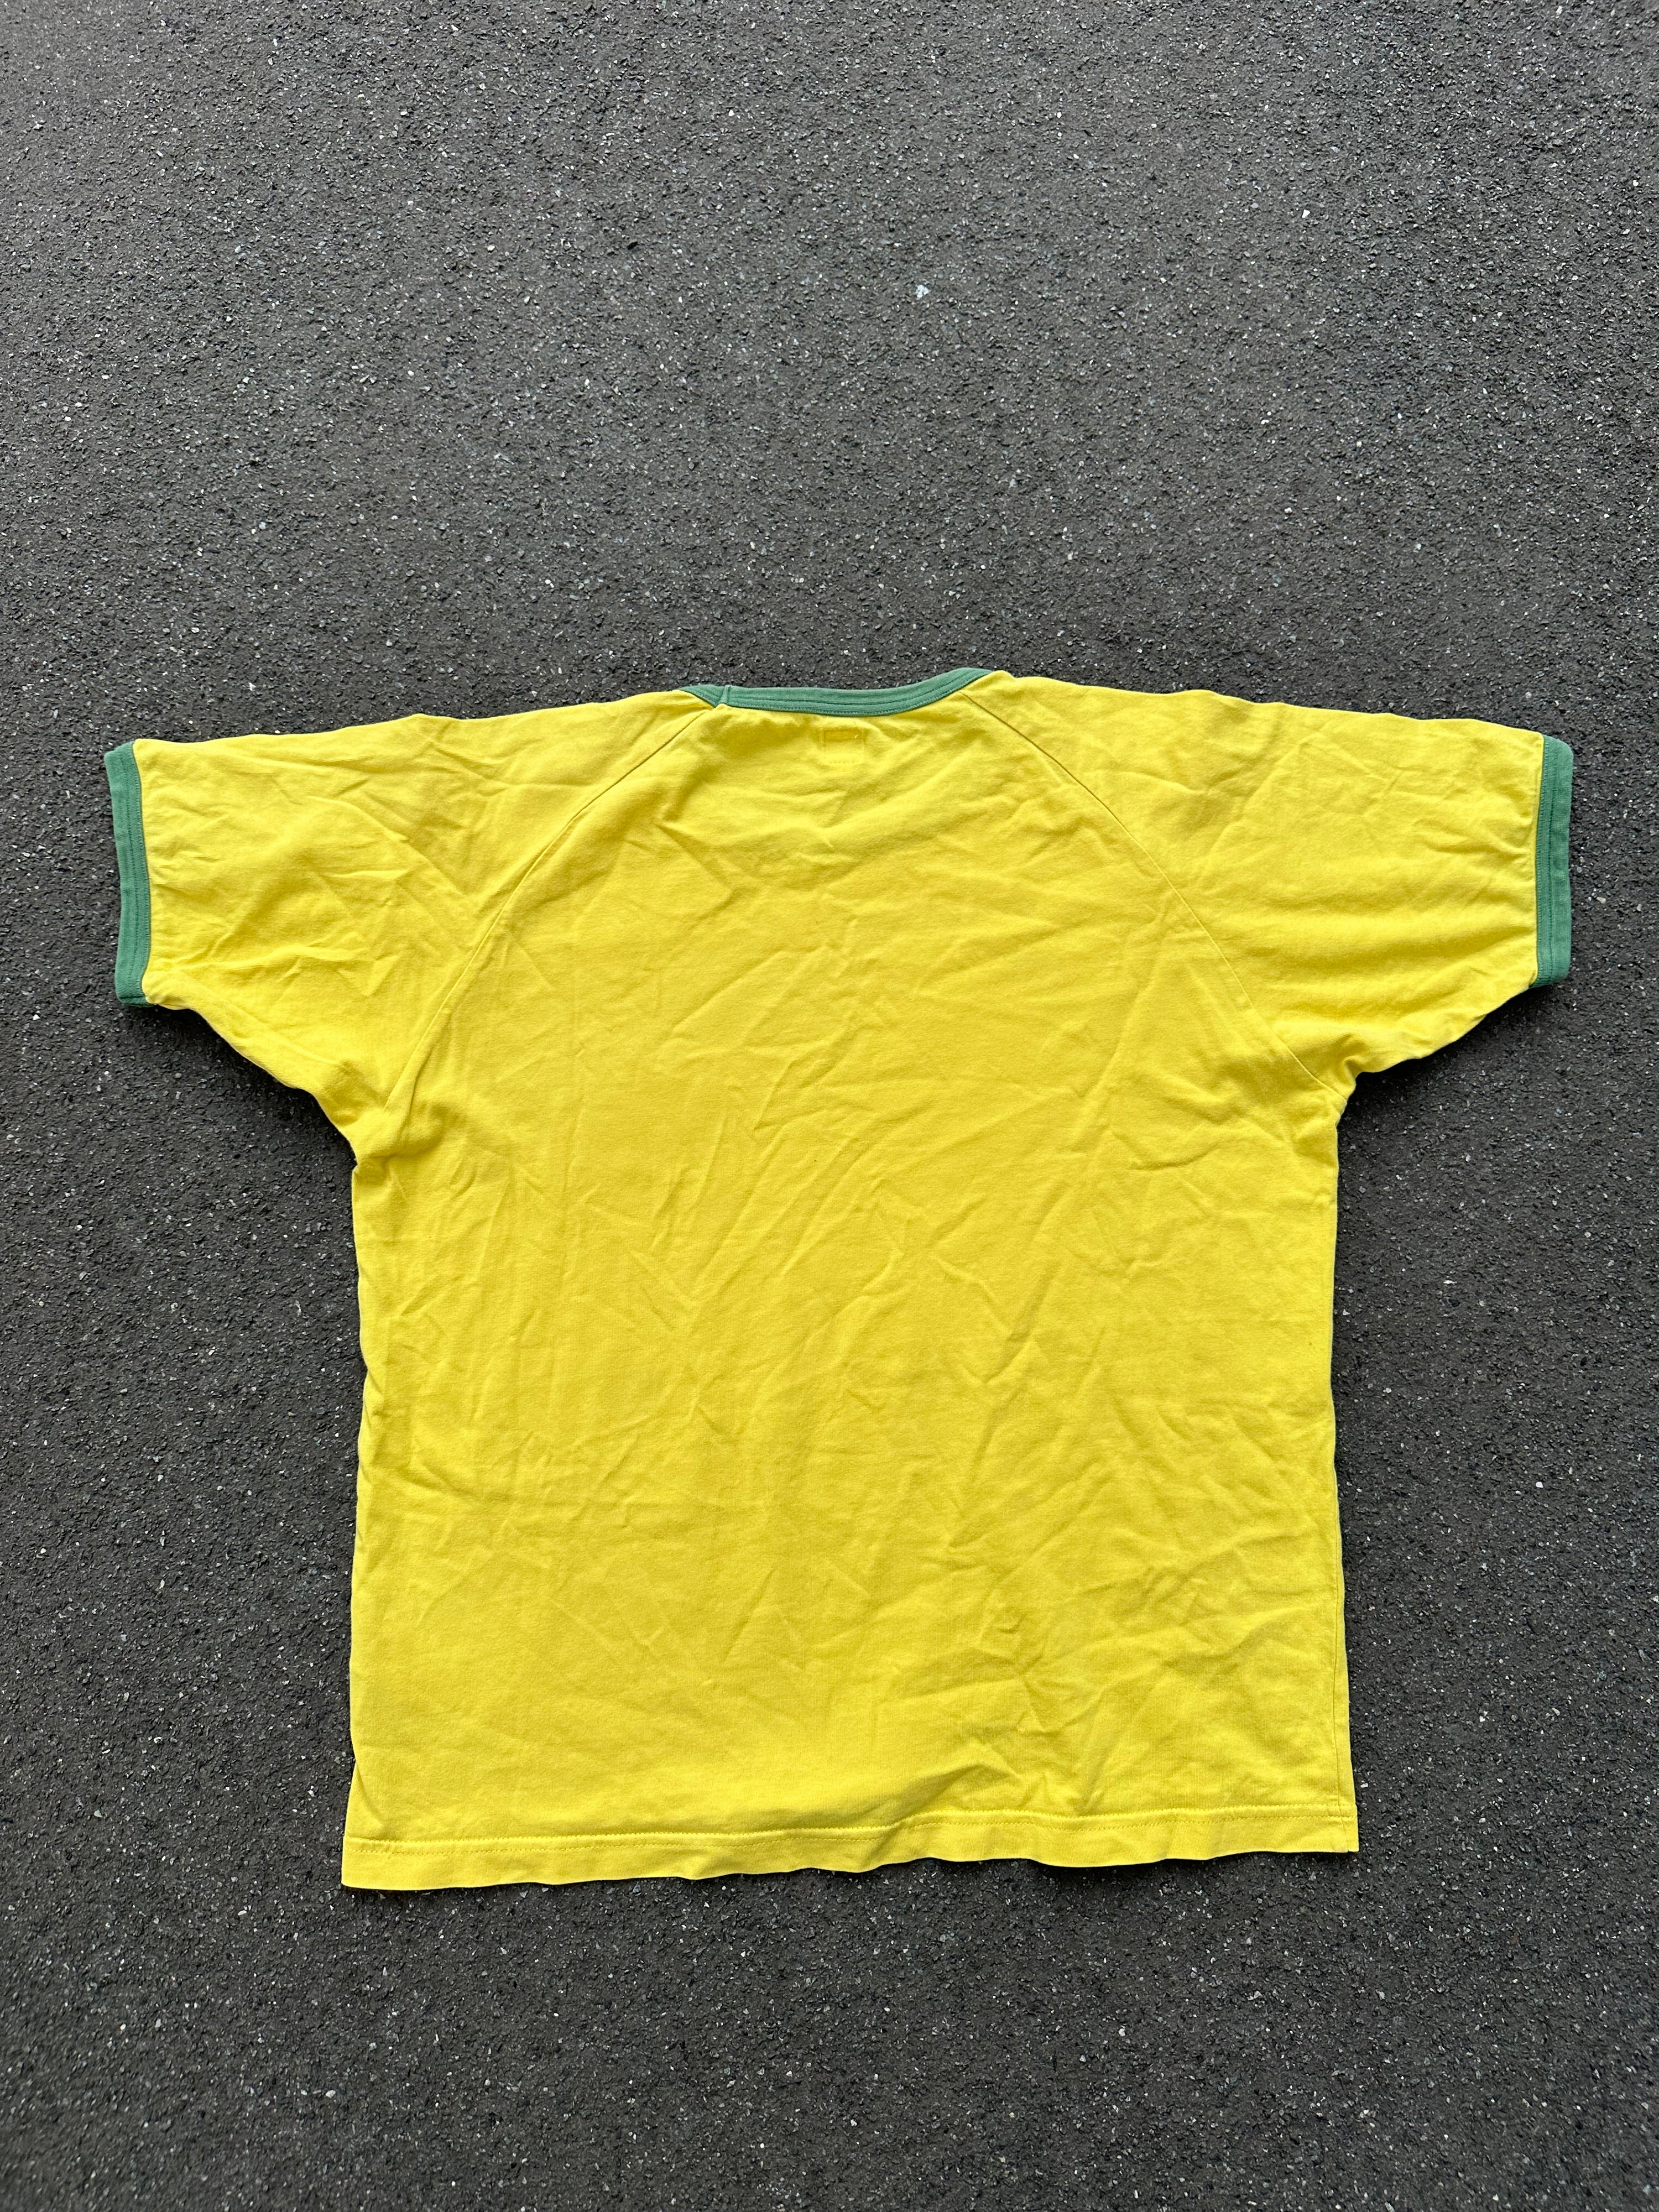 Adidas T-Shirt Gelb Grün (L)